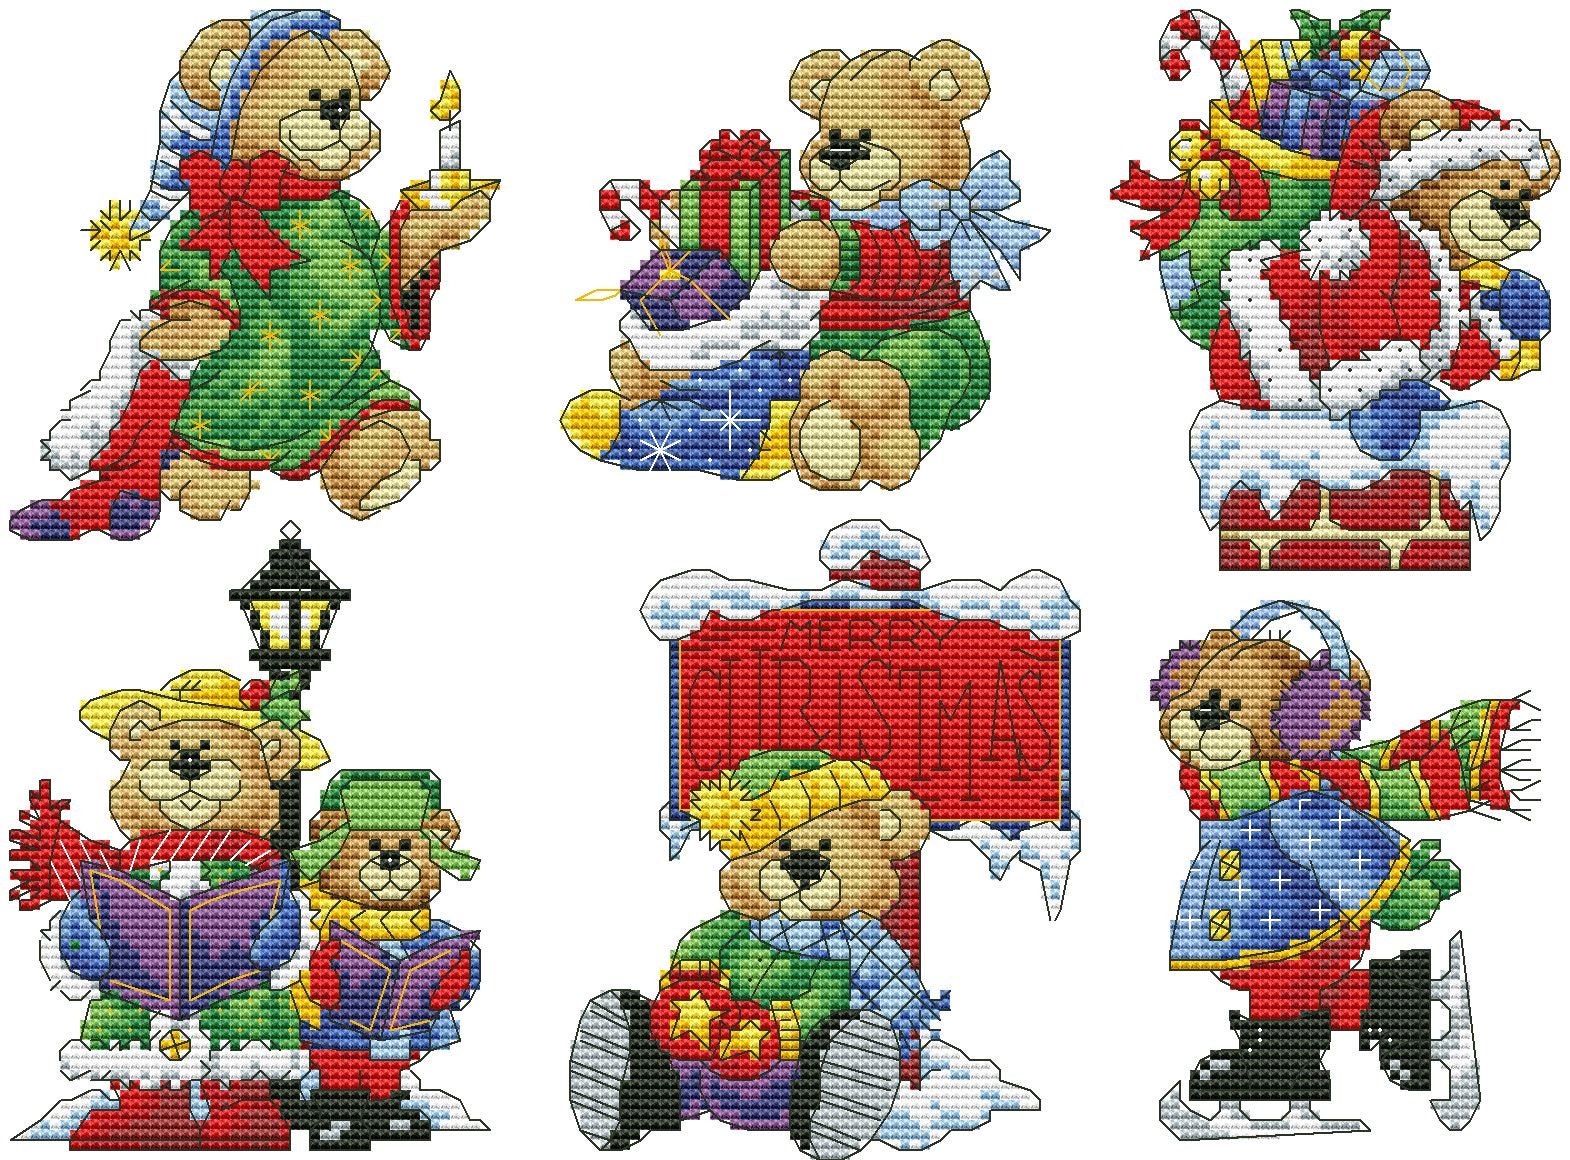 Christmas Cross Stitch Pattern Christmas Bears Ornaments Set - Etsy